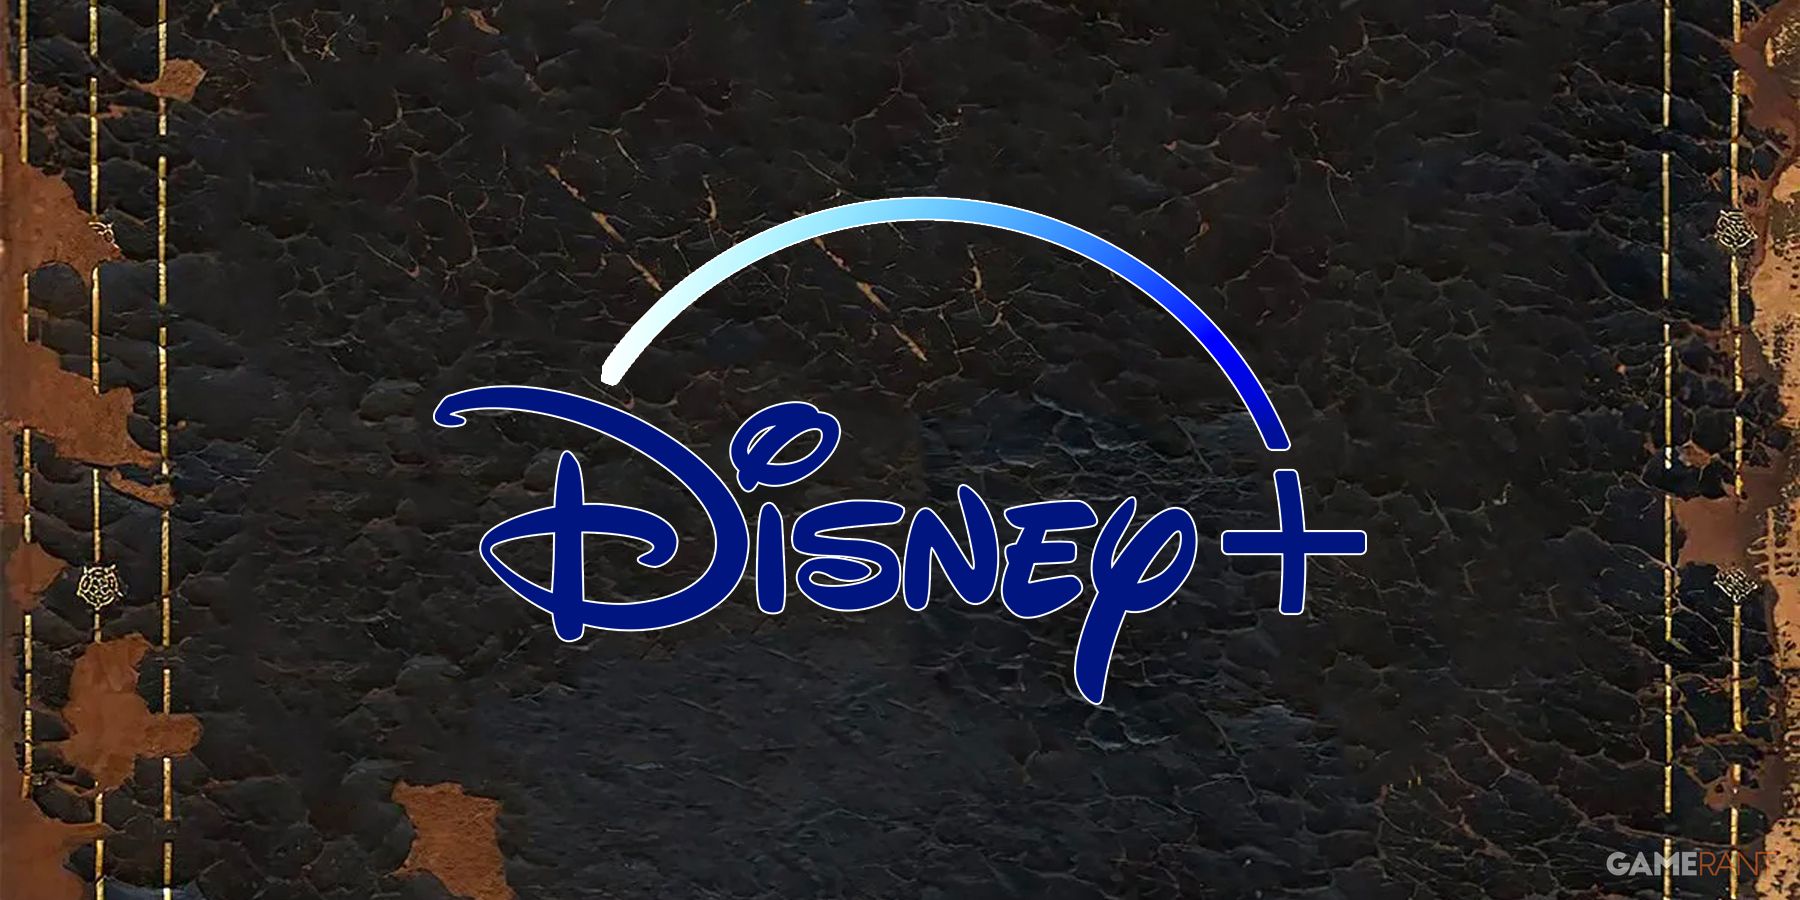 Disney+ is now streaming on the Roku platform